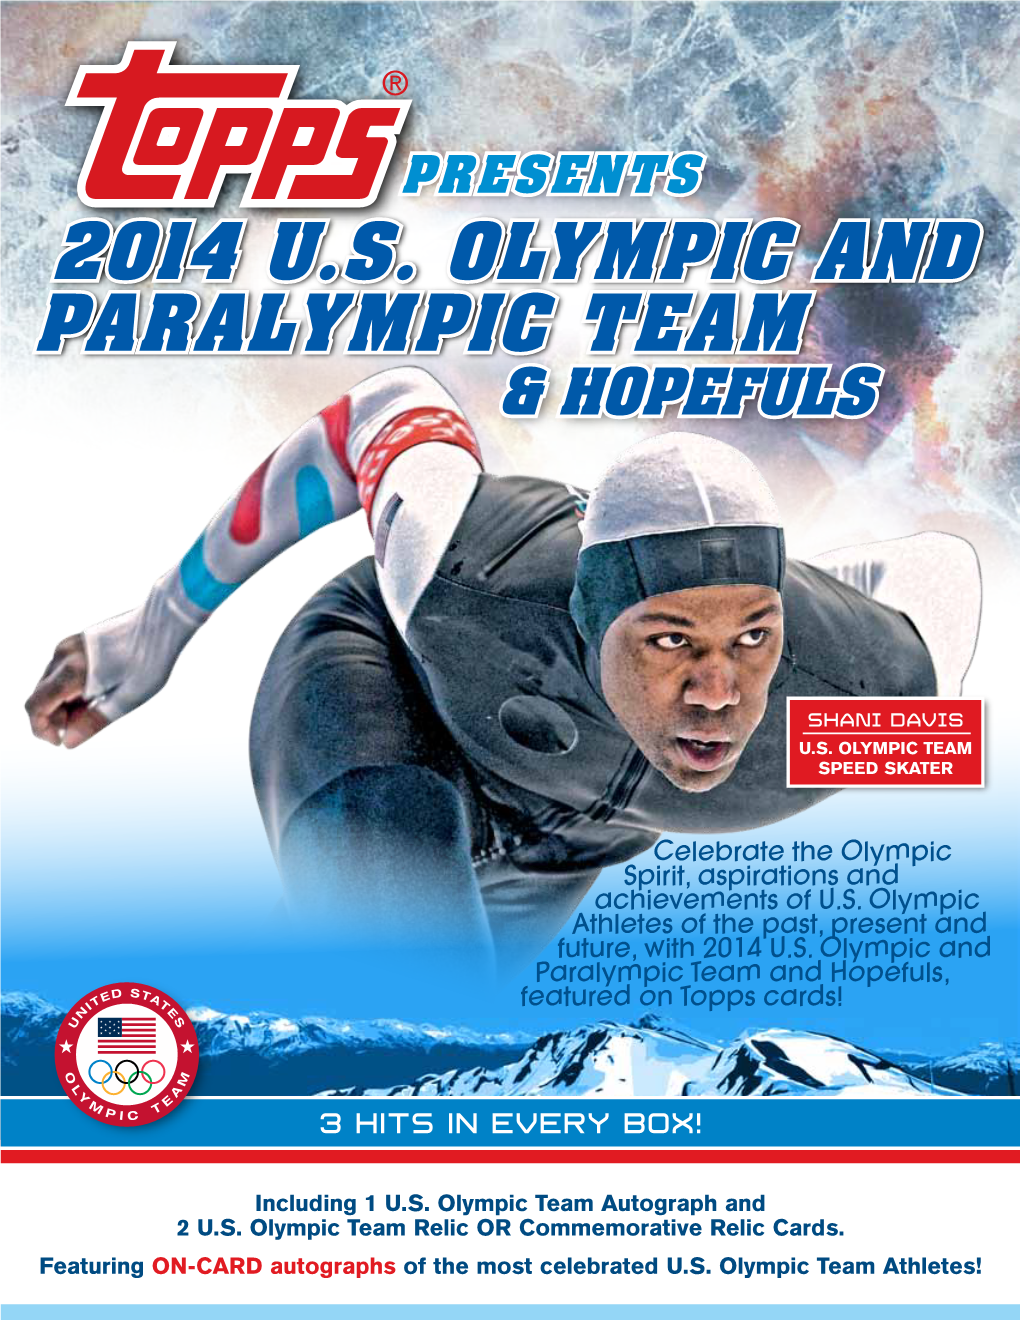 2014 U.S. Olympic and Paralympic Team & Hopefuls